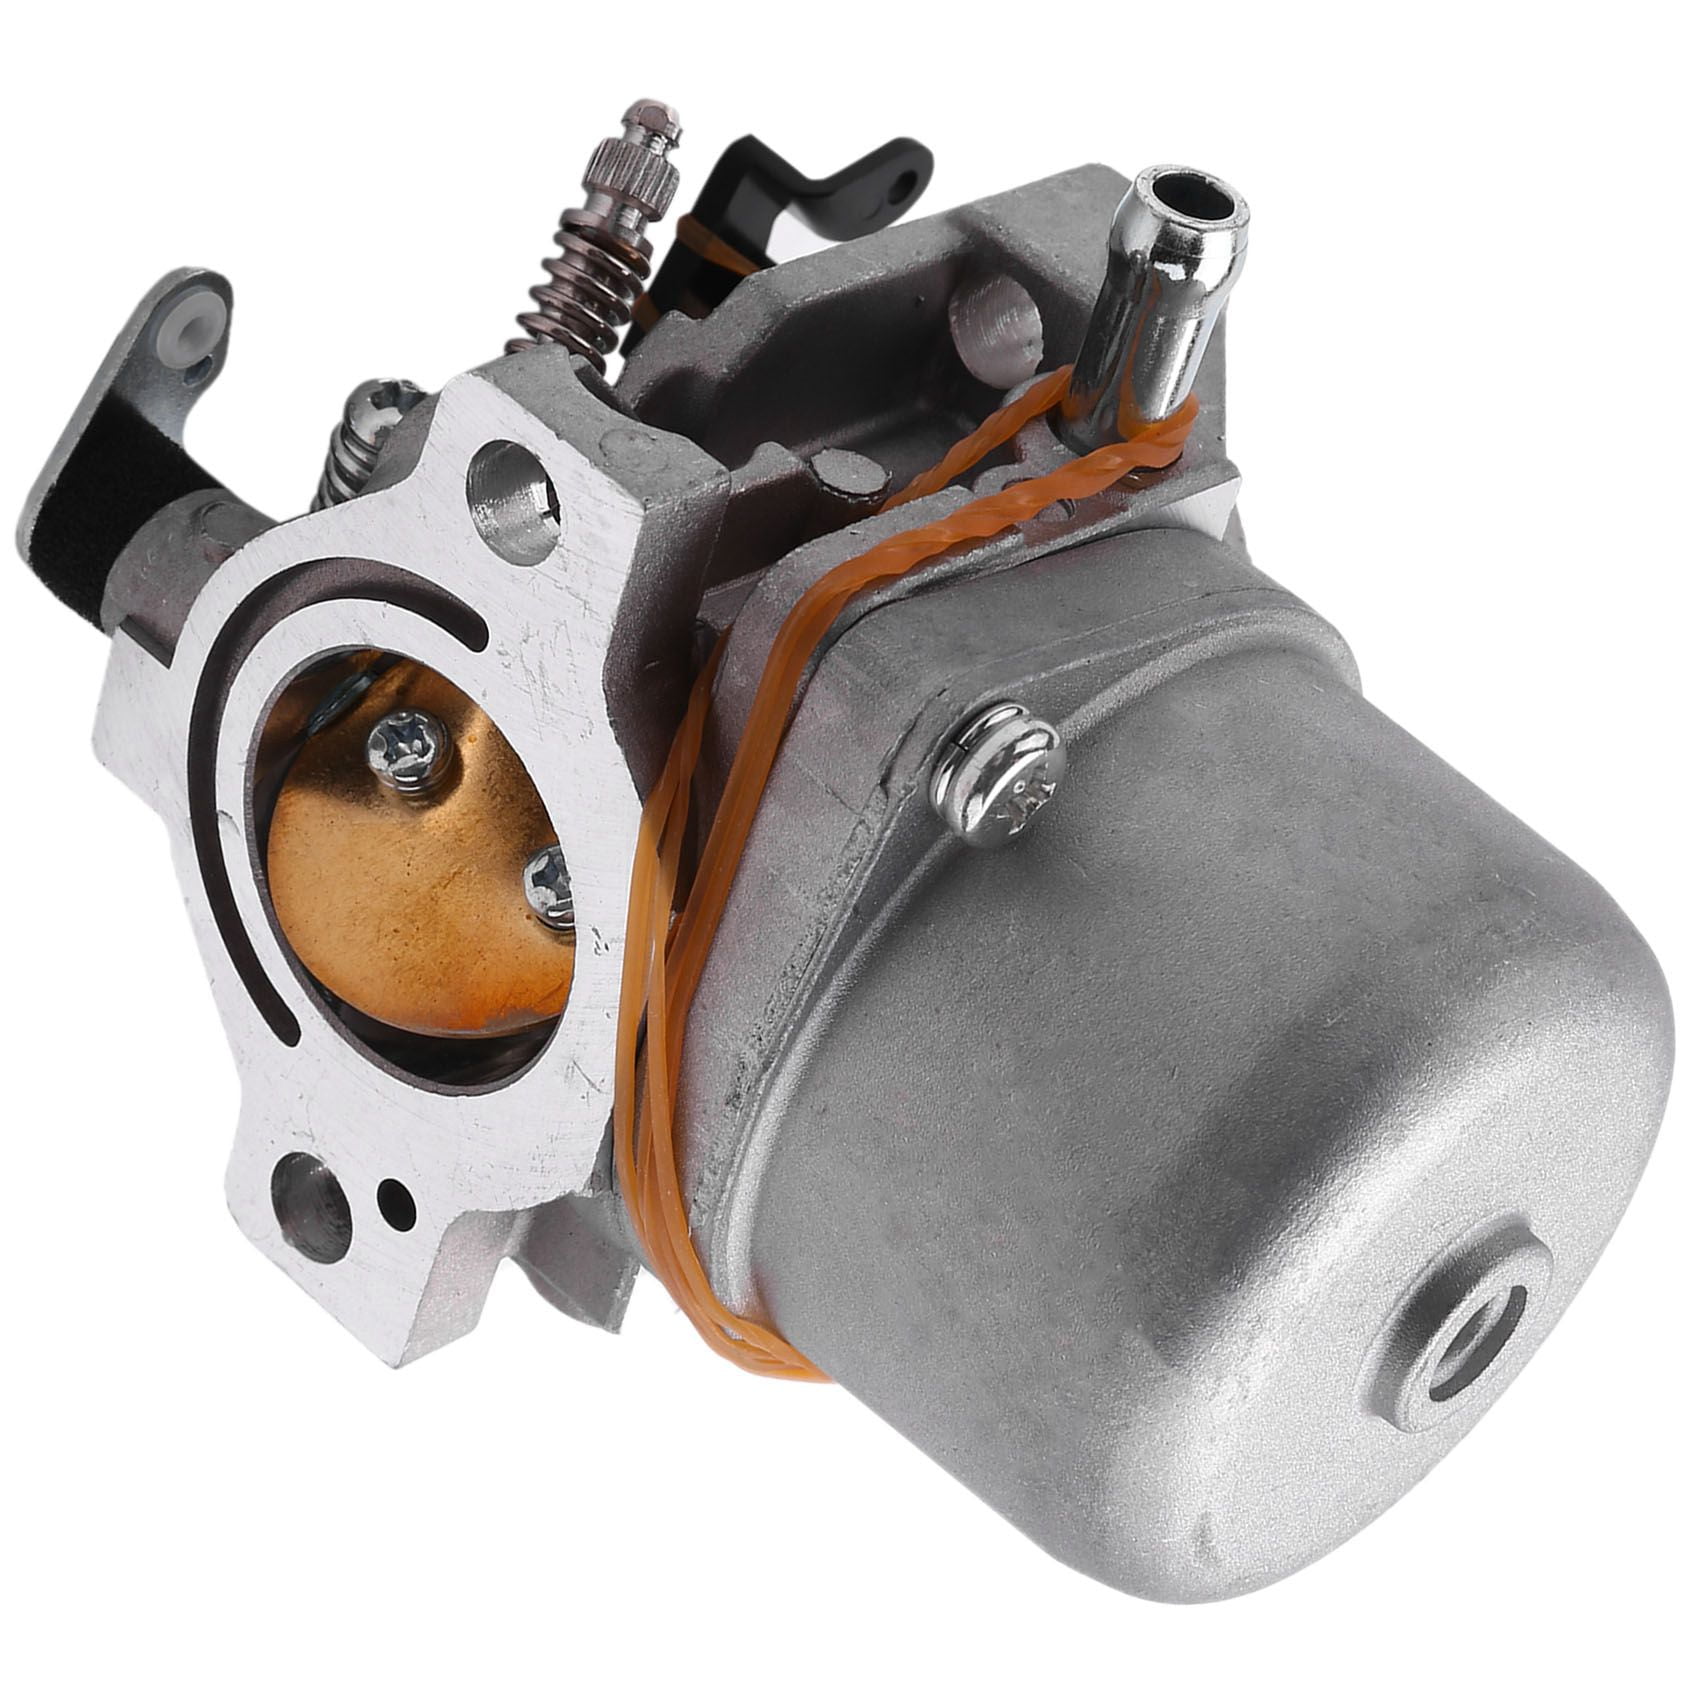 Carburetor Mounting Gasket Fuel Filter For Briggs & Stratton Walbro LMT 5-4993